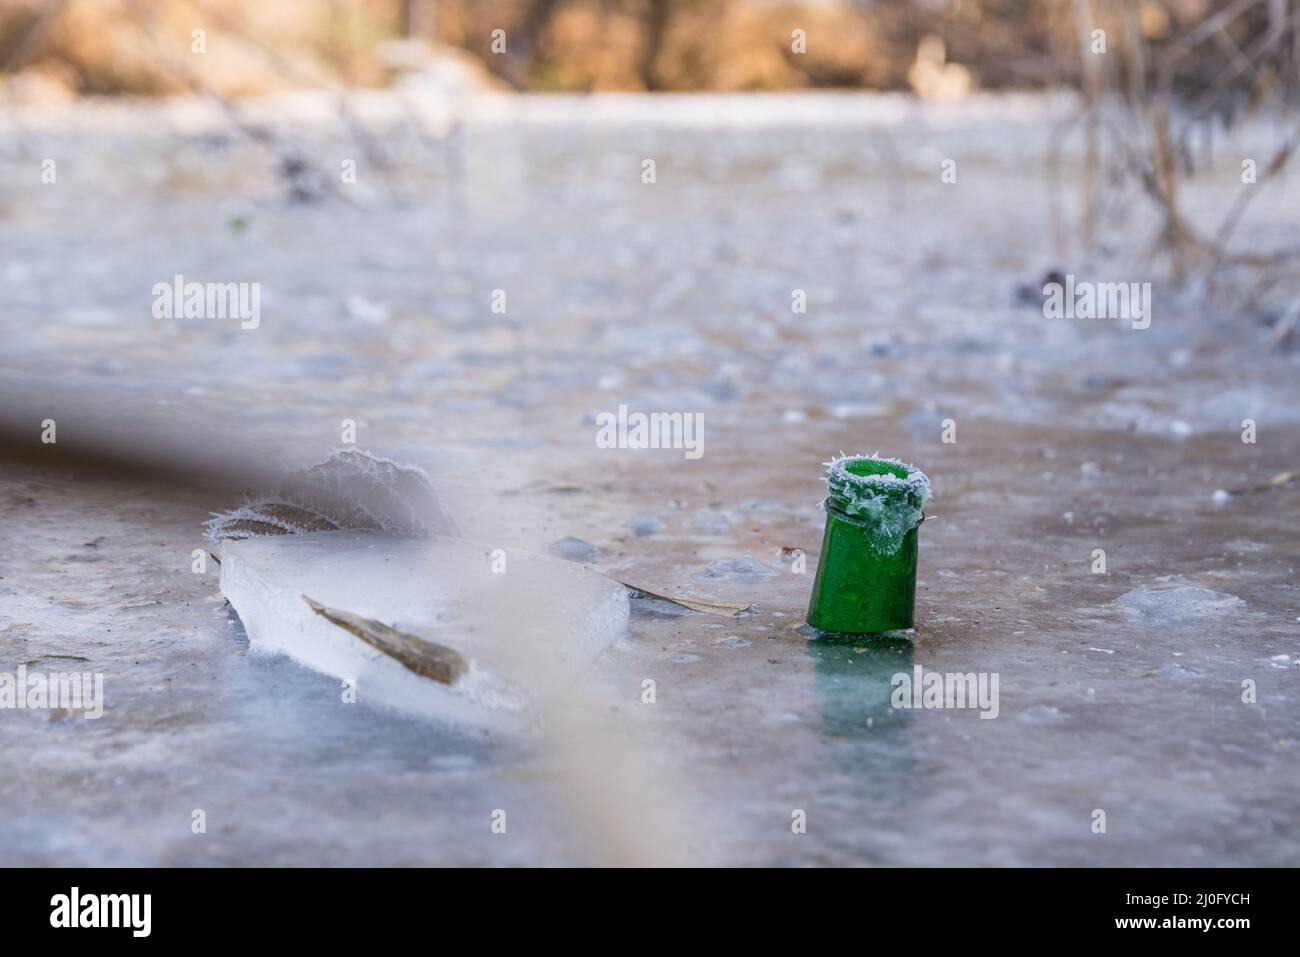 Frozen Bottle Water Stock Photos - 10,466 Images